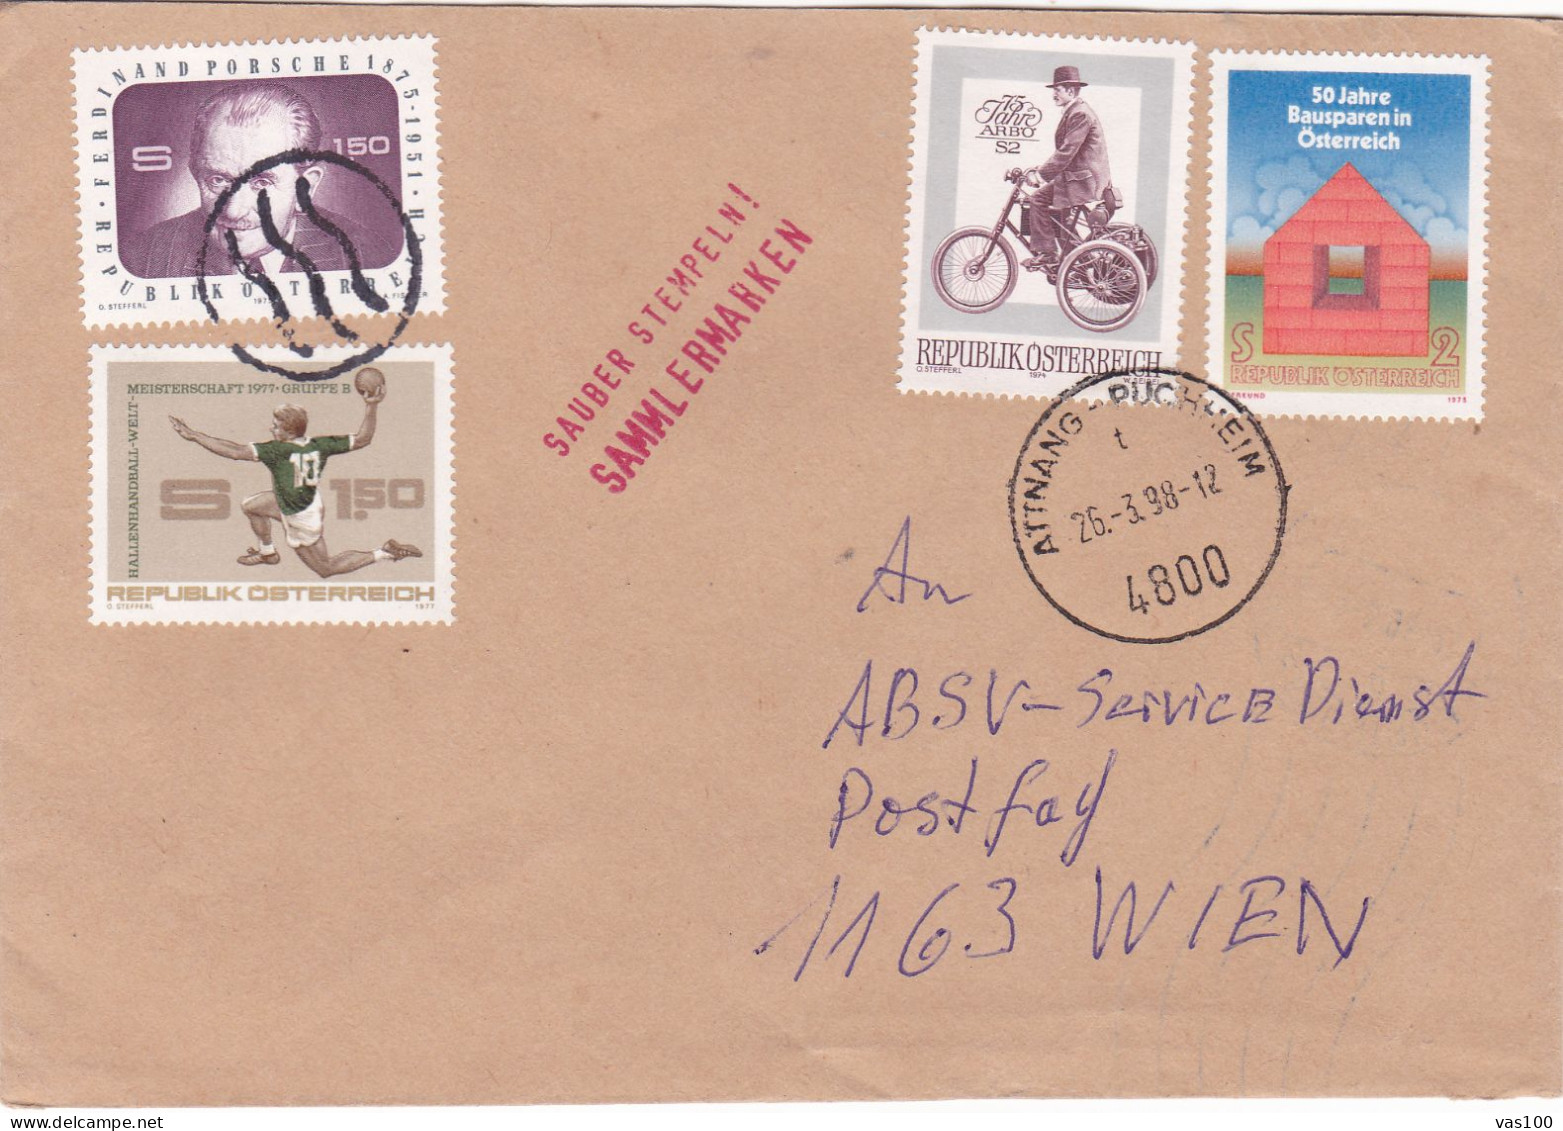 BICYCLE BEAUTIFUL STAMPED ENVELOPE  COVERS 1998  AUSTRIA - Briefe U. Dokumente